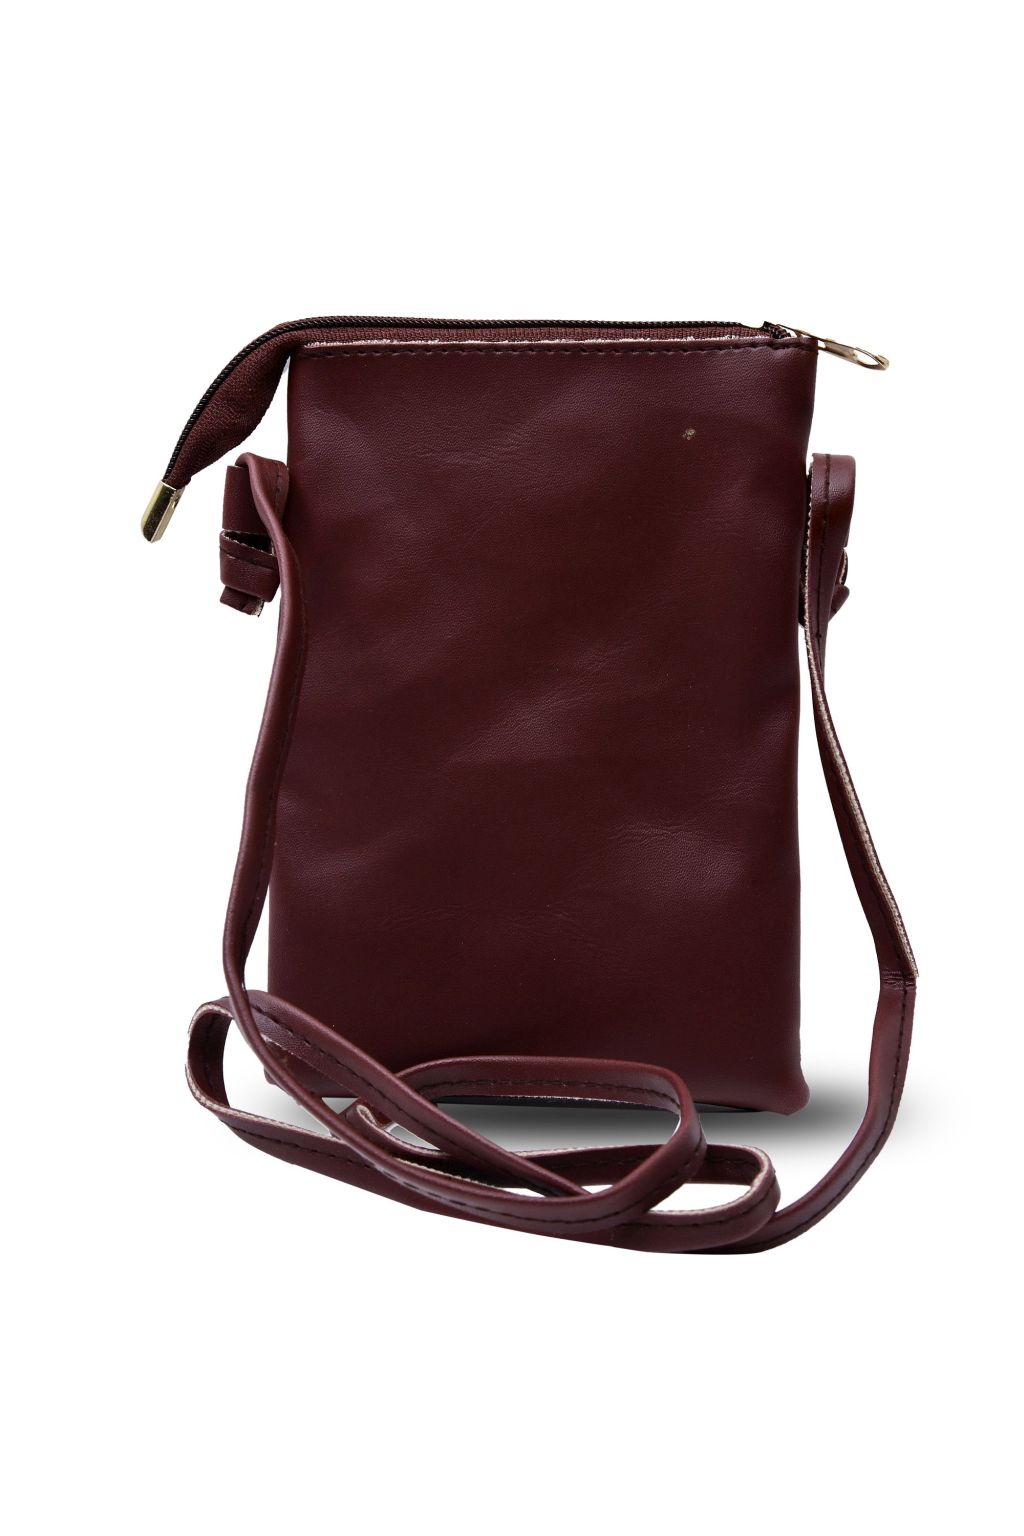 TGK Brown Sling Bag New Mobile Pouch Sling Bag Dark Brown - Price in India  | Flipkart.com